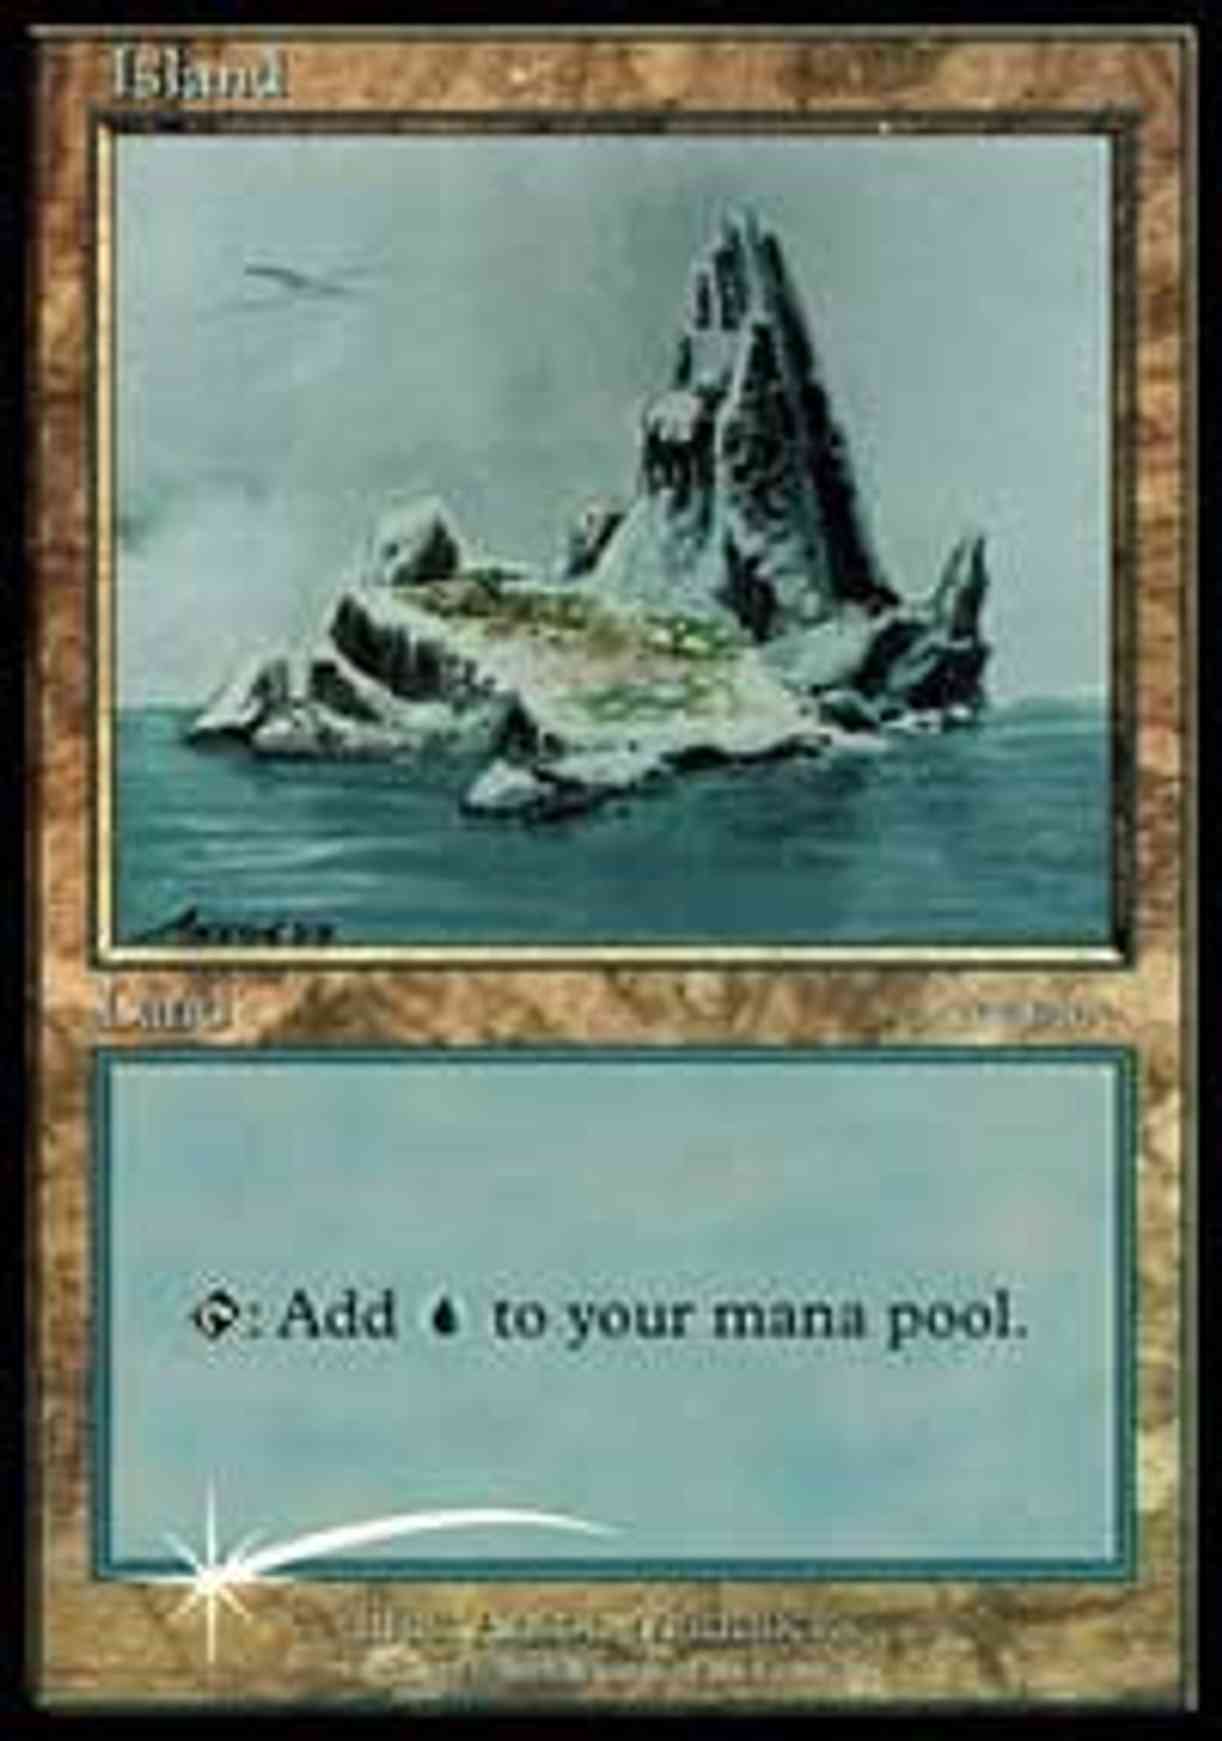 Island (2001) magic card front